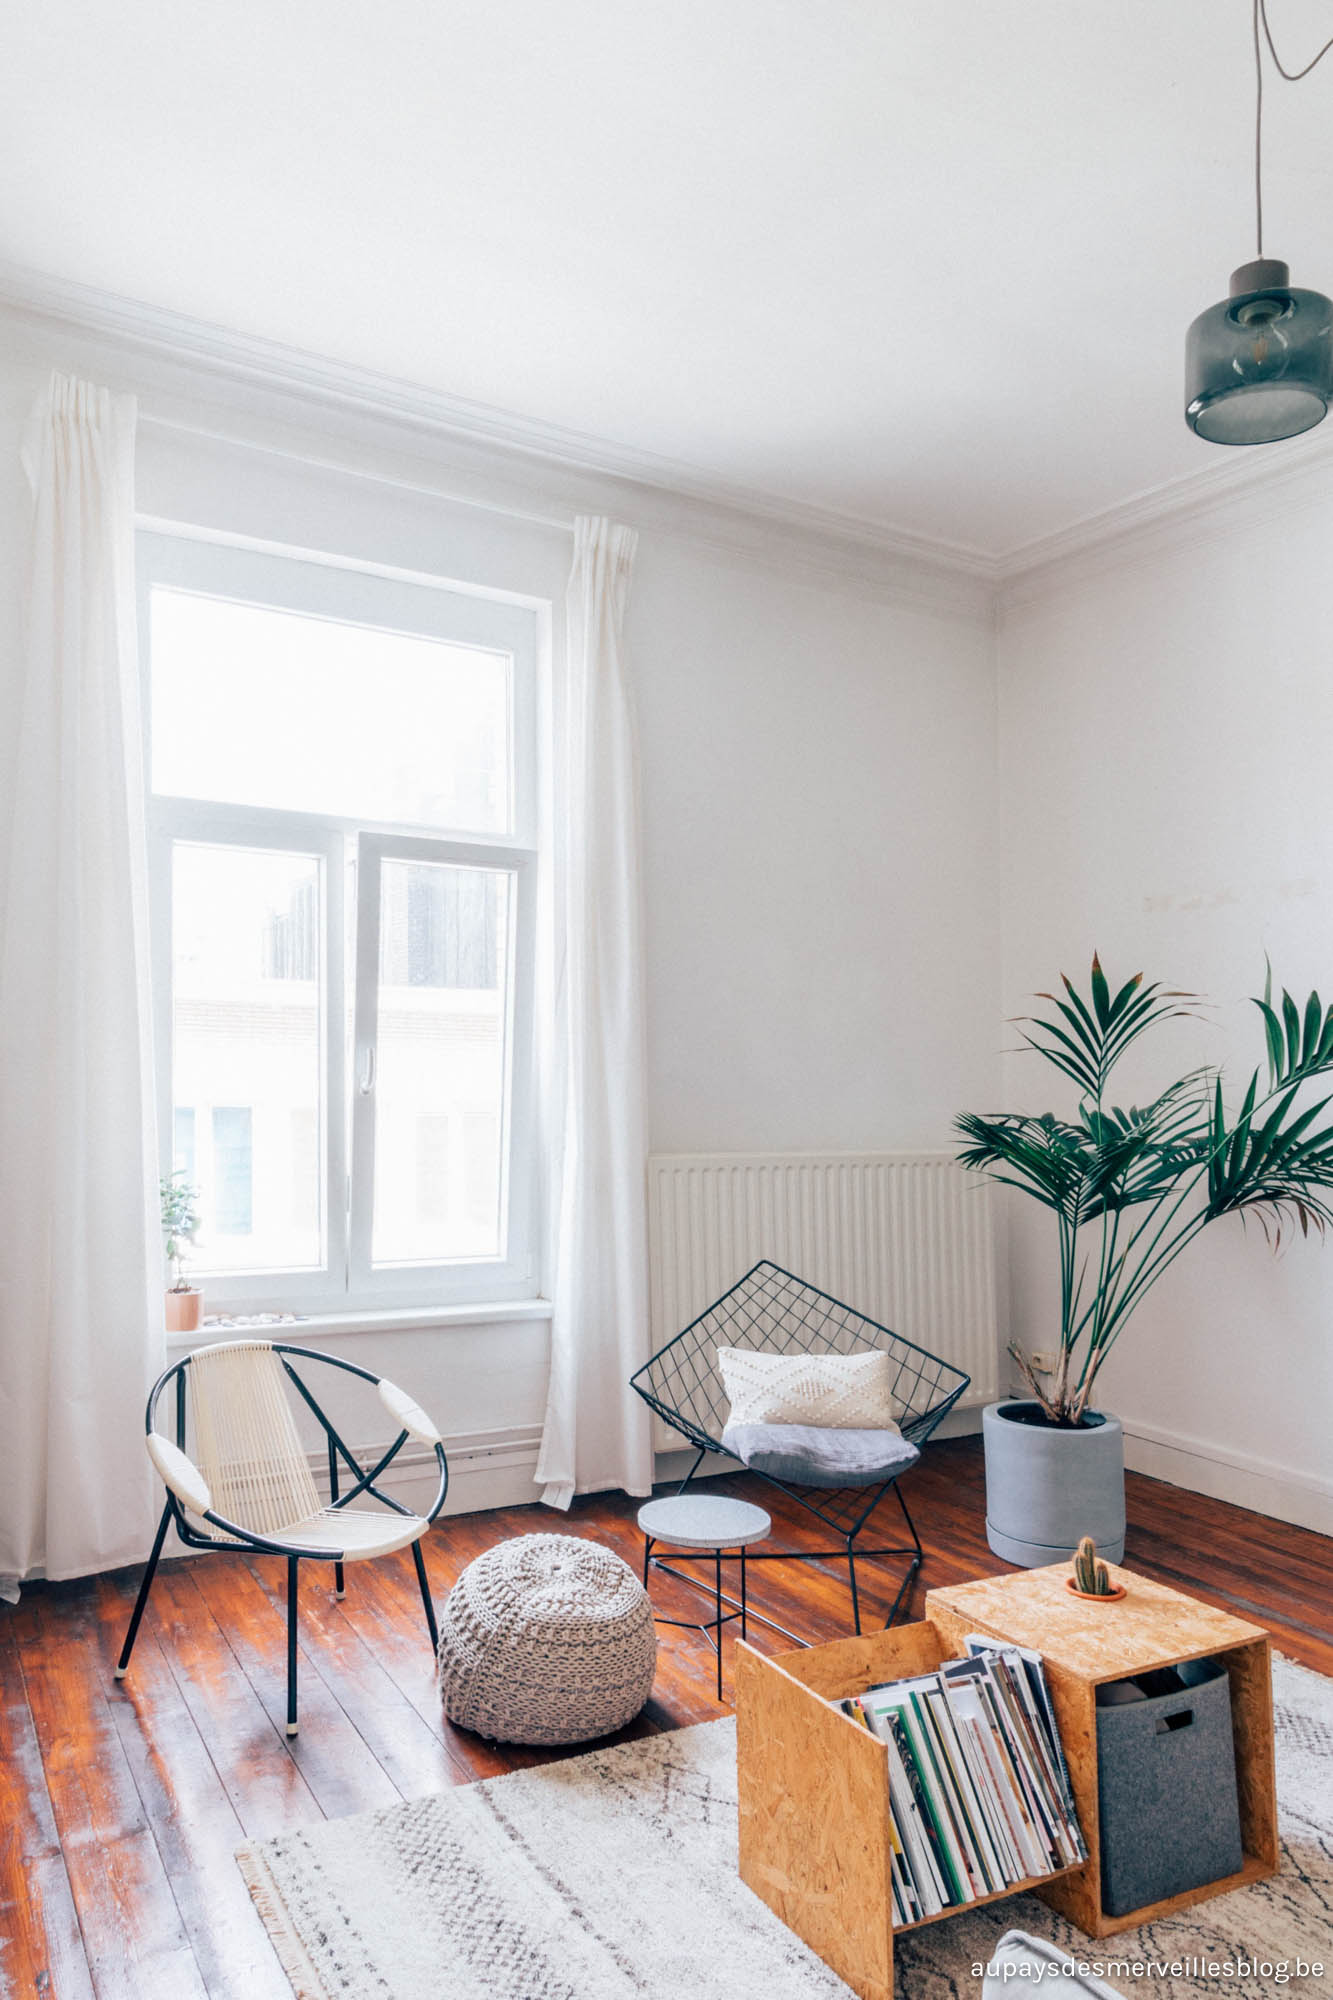 my living room with parentesi lamp by flos - hannelore veelaert for aupaysdesmerveillesblog